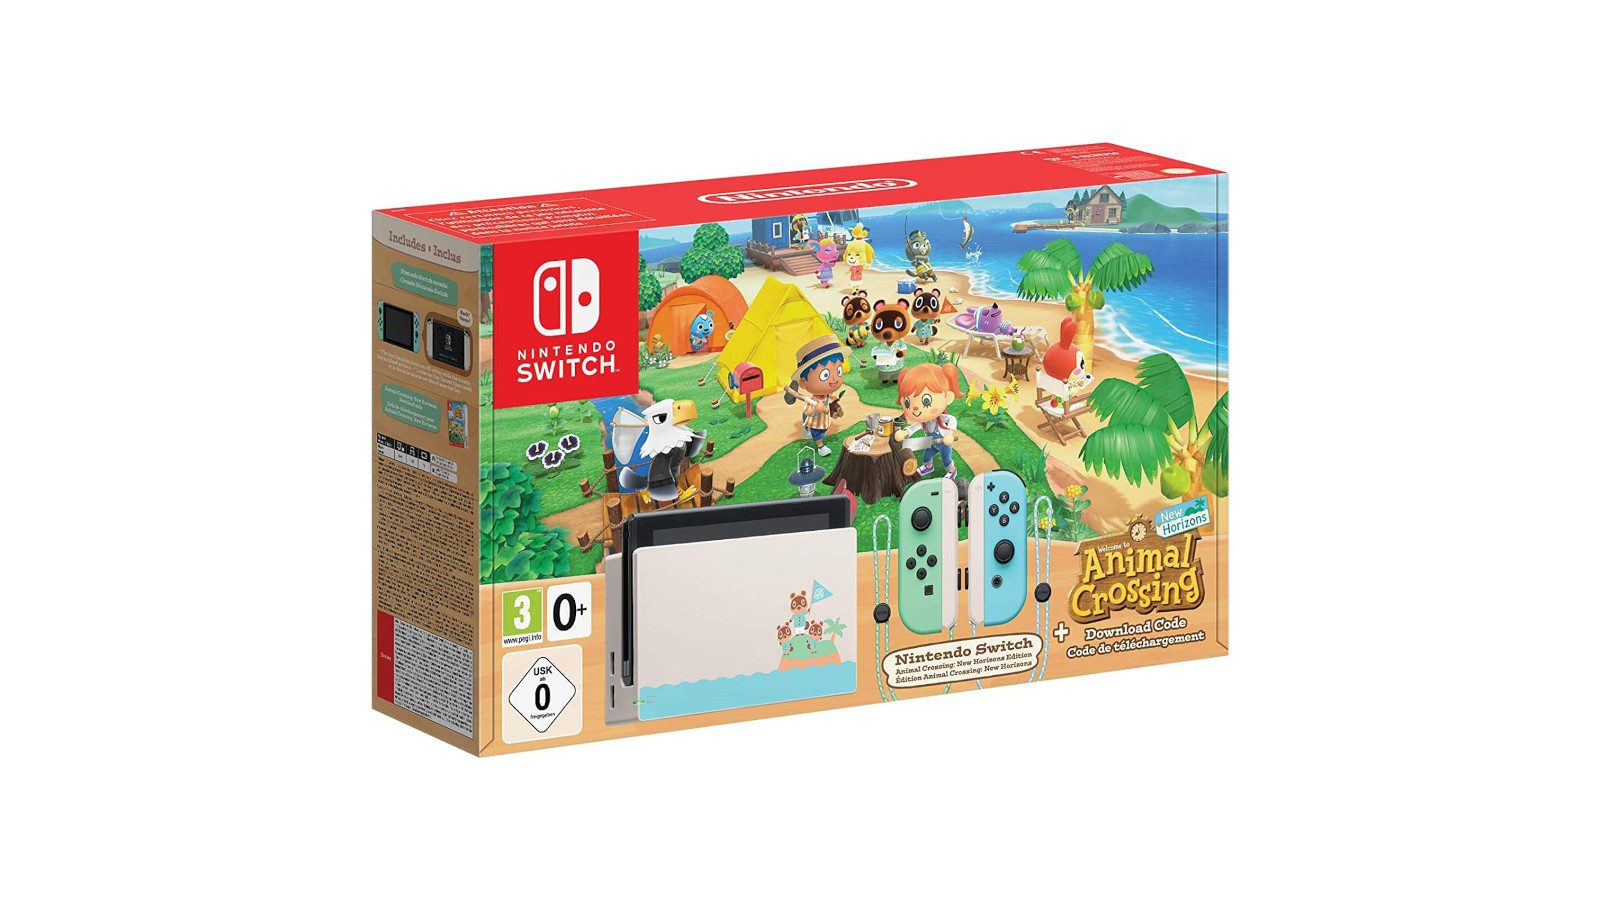 Nintendo Switch Animal Crossing Edición New Horizons